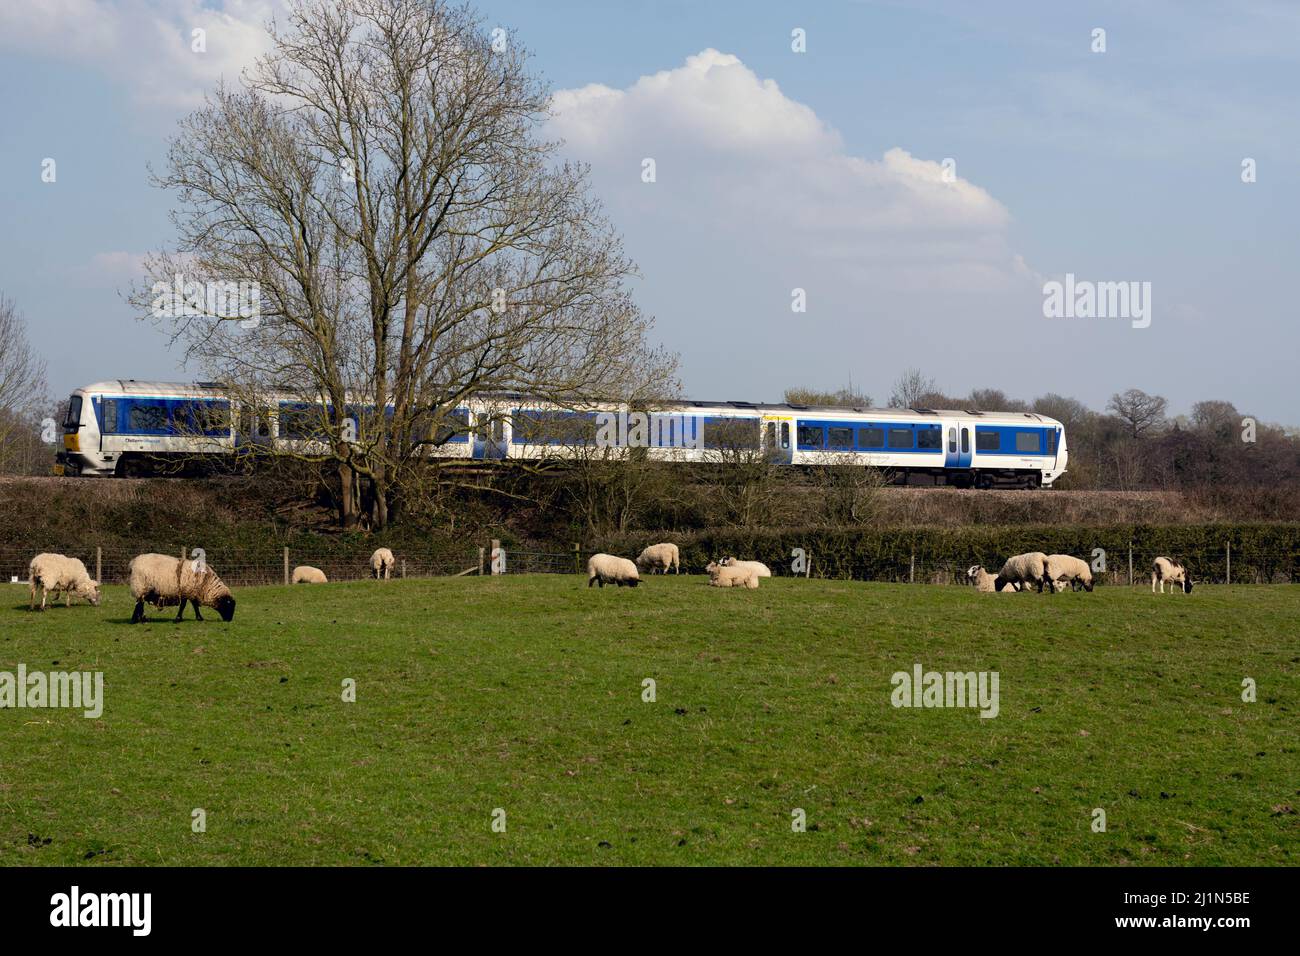 Chiltern Railways train in the countryside, Warwickshire, UK Stock Photo